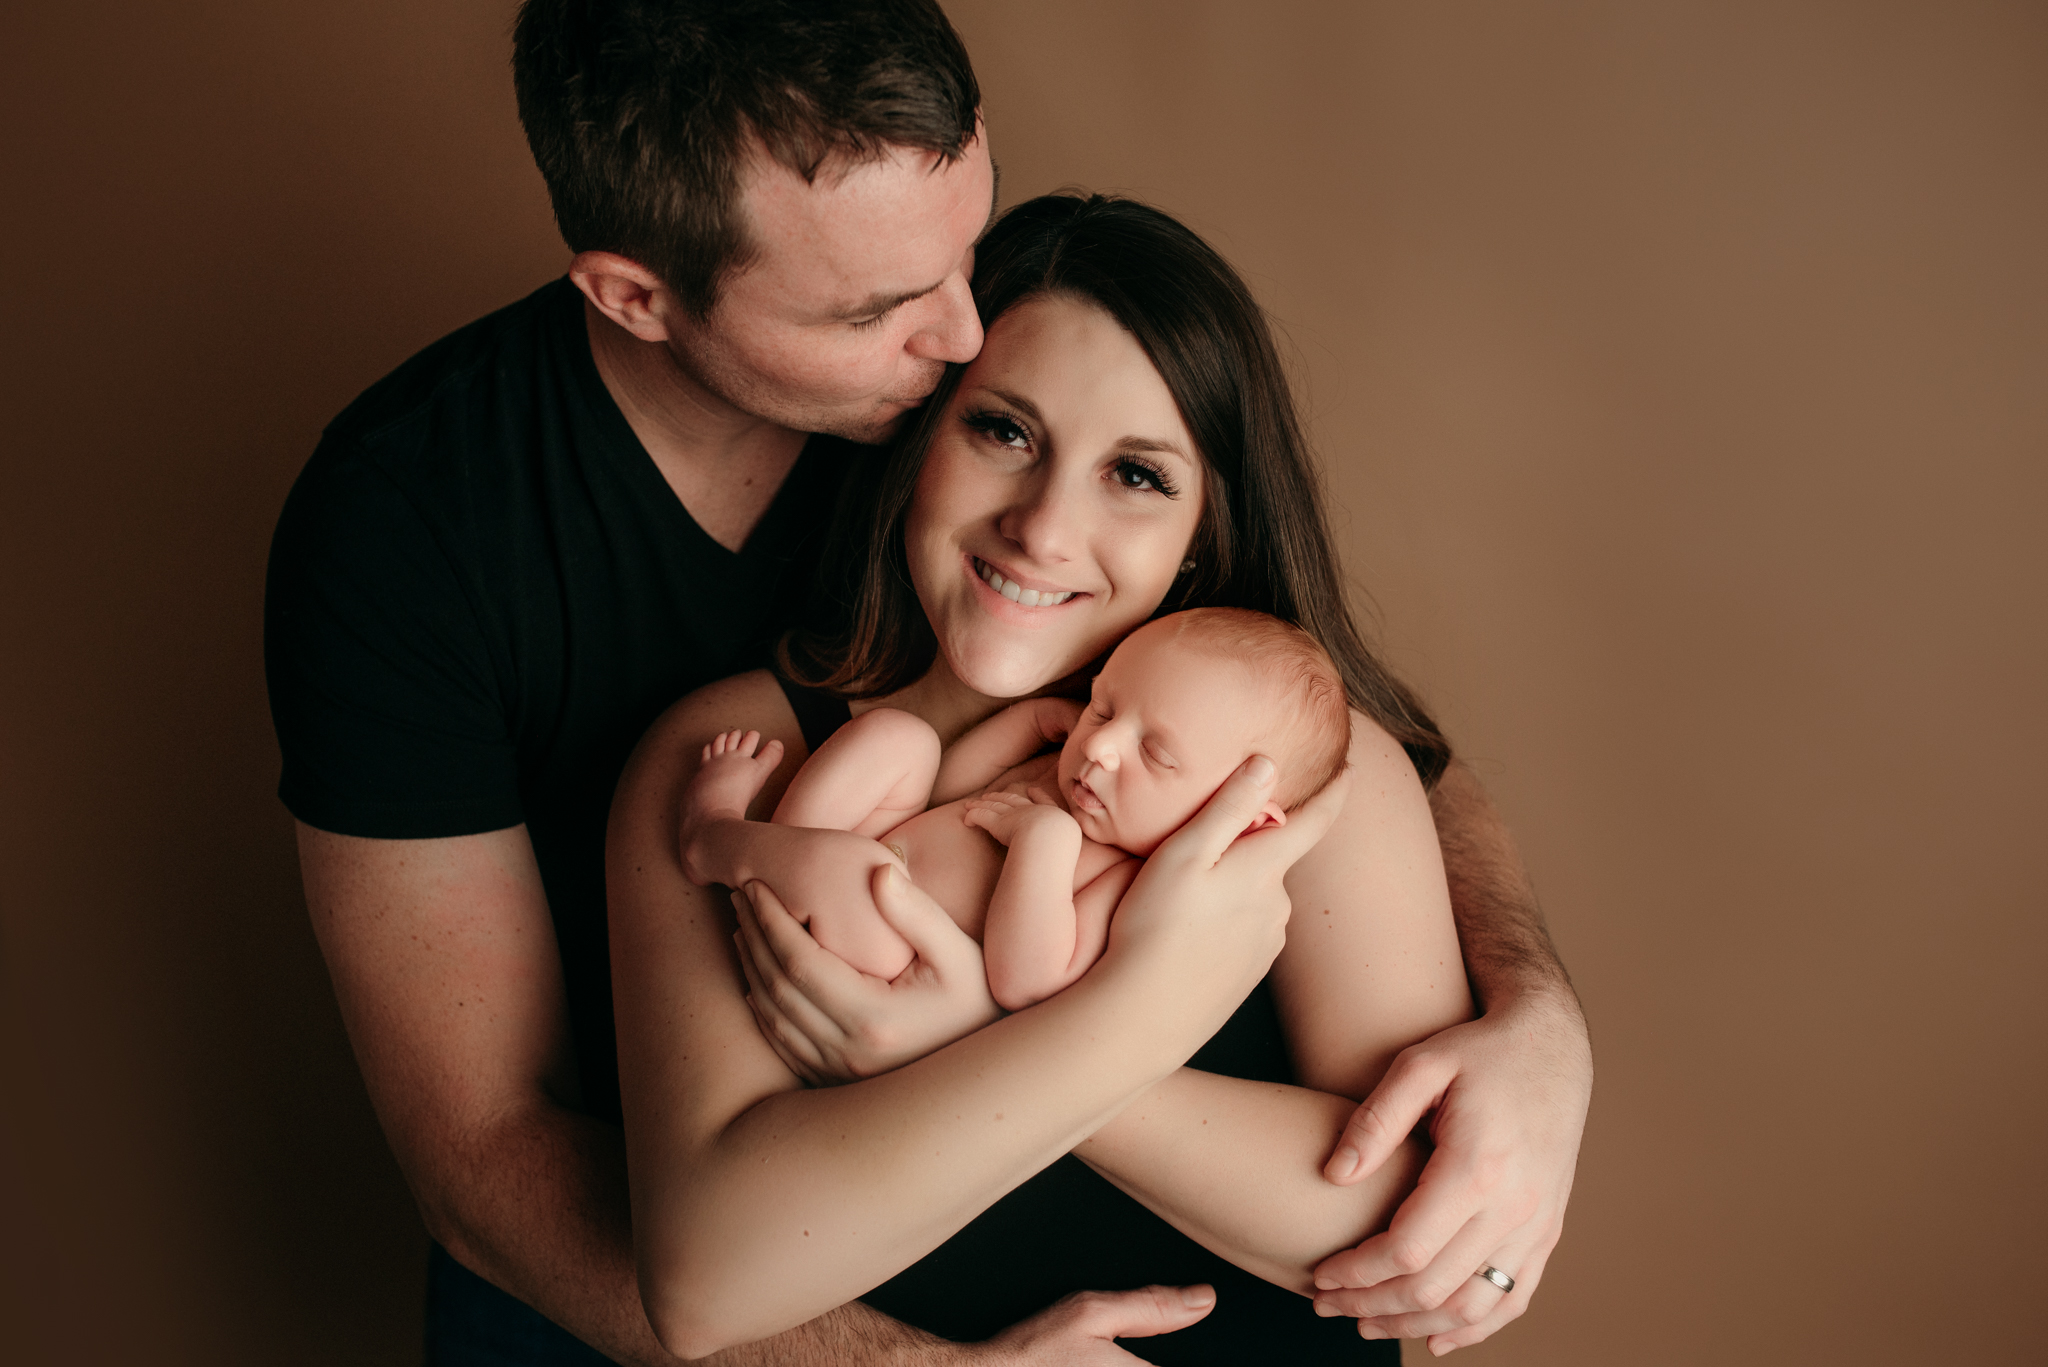 best newborn photographer portland oregon